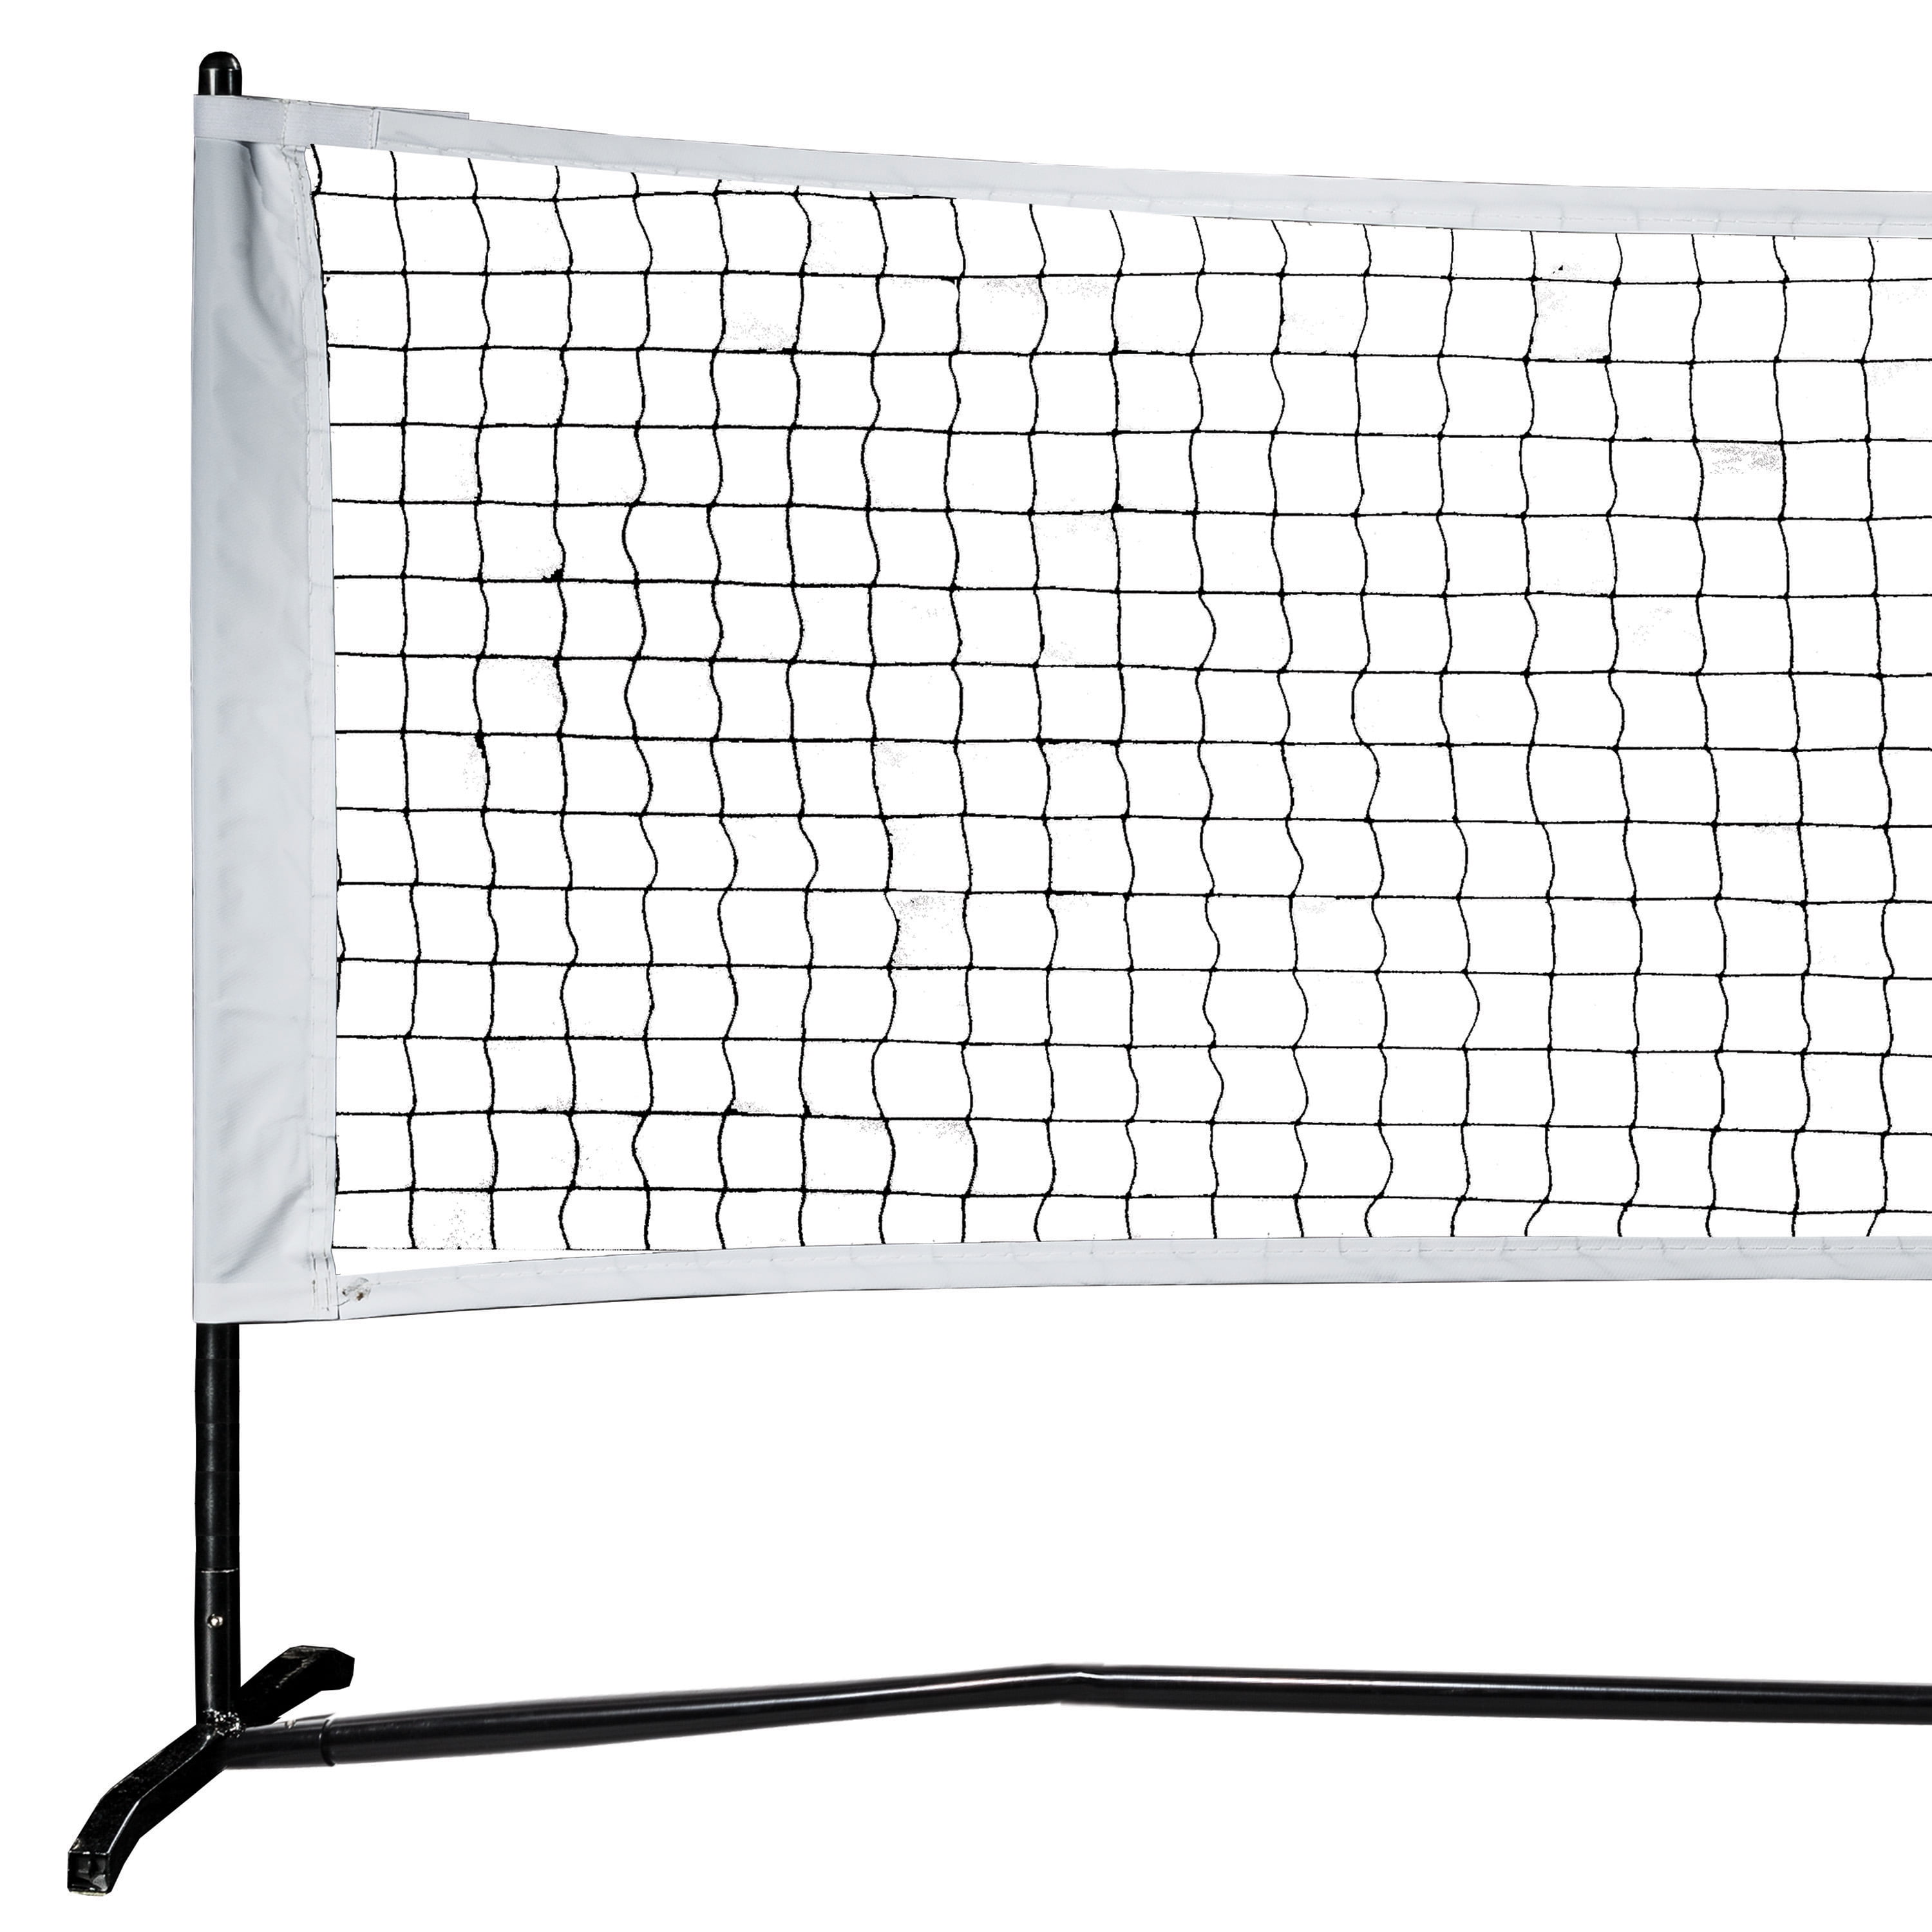 6.1m x 0.76m Professional Training Square Mesh Badminton Net Green 